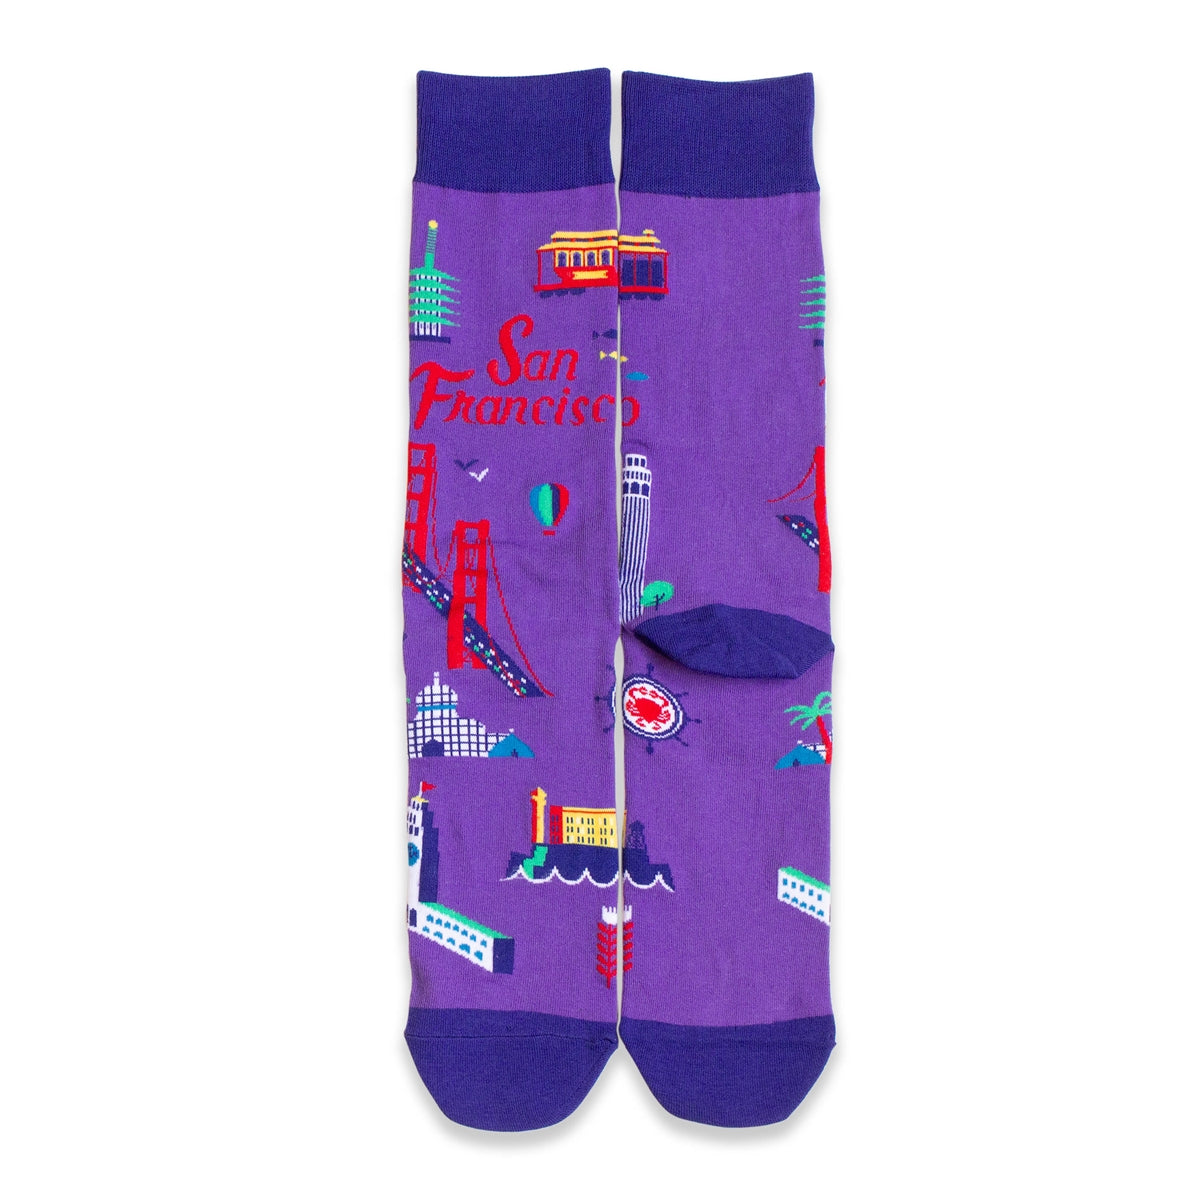 Purple novelty socks with multicolored designs of San Francisco landmarks, including Golden Gate Bridge and Alcatraz Island.